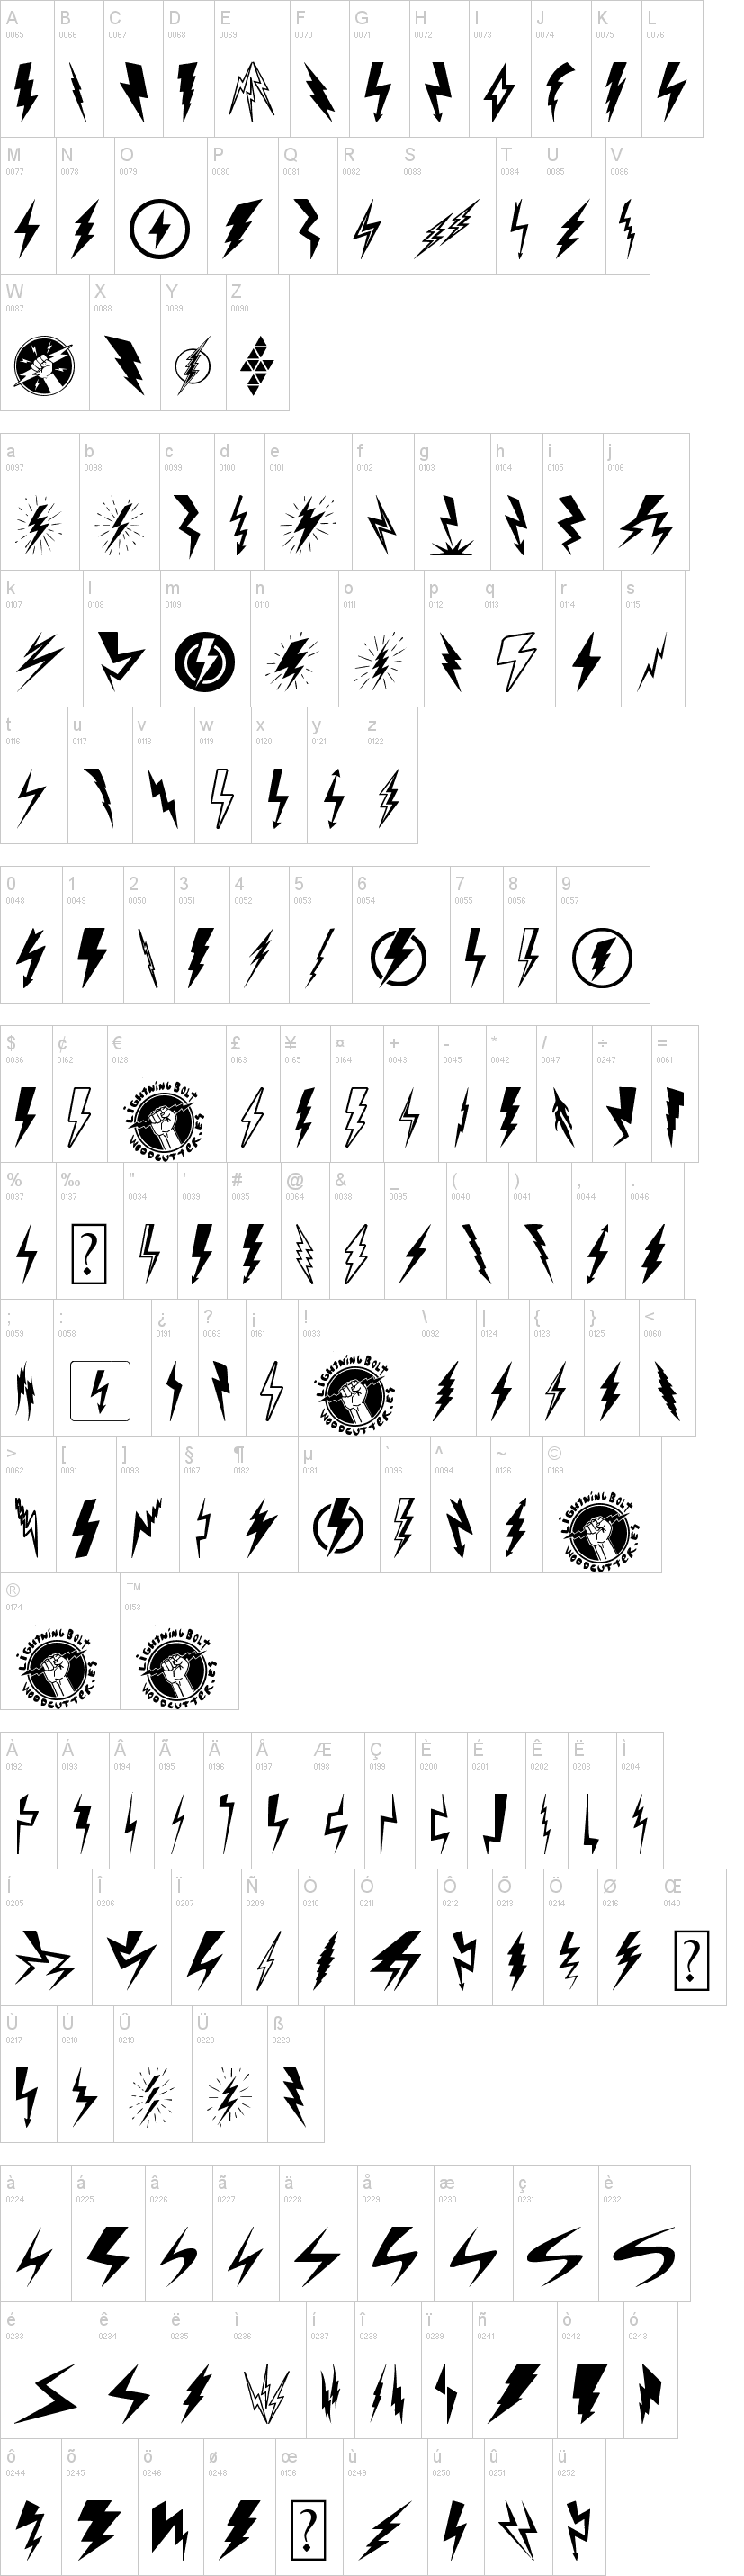 Lightning Bolt Font 